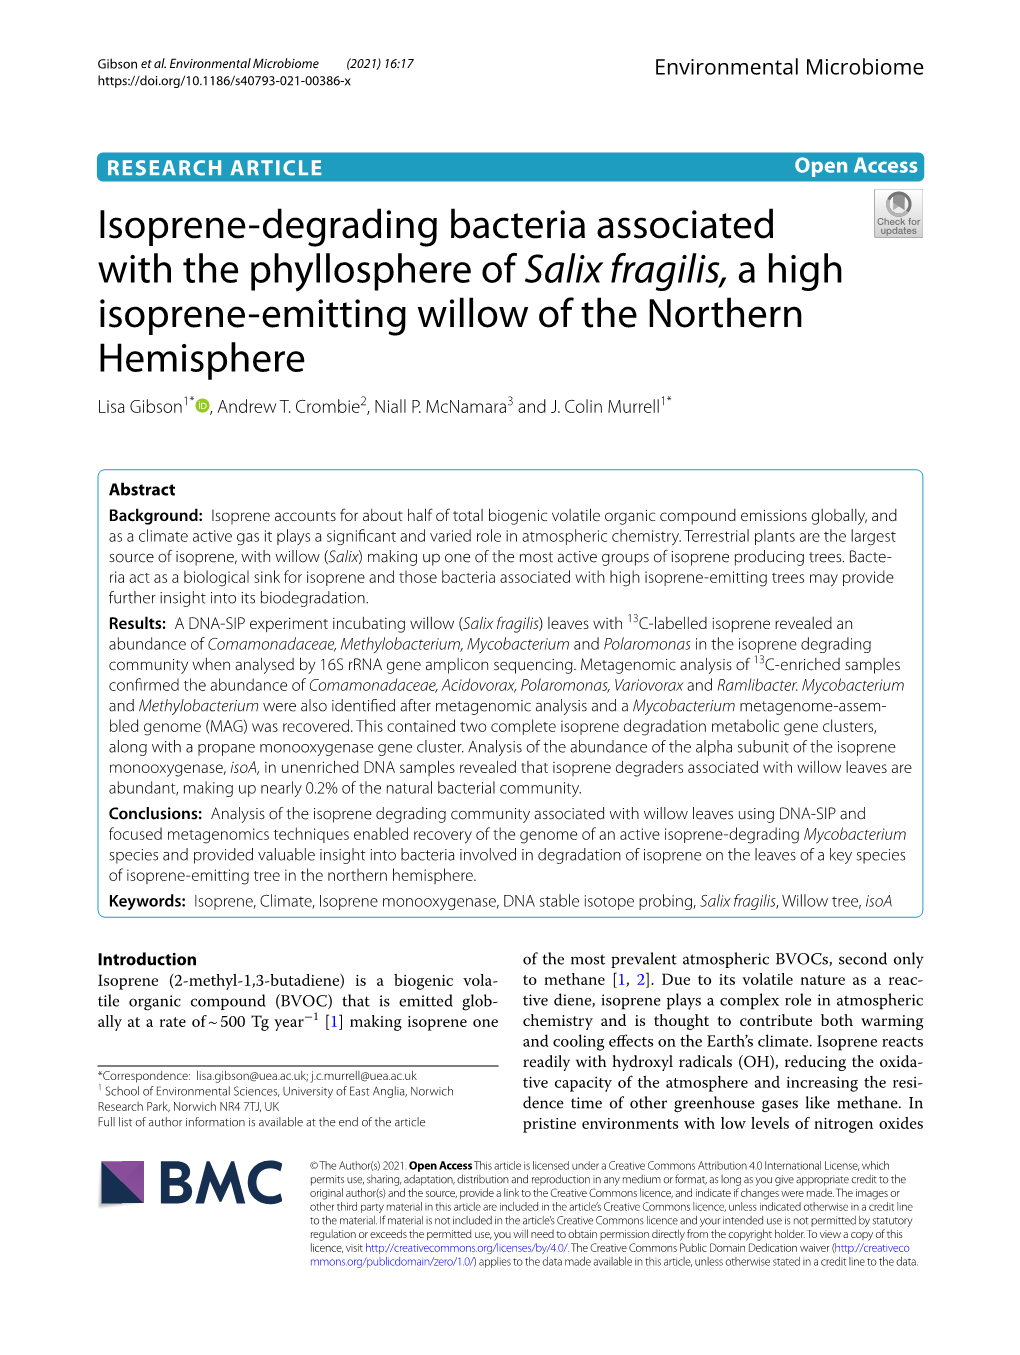 Isoprene-Degrading Bacteria Associated with the Phyllosphere Of